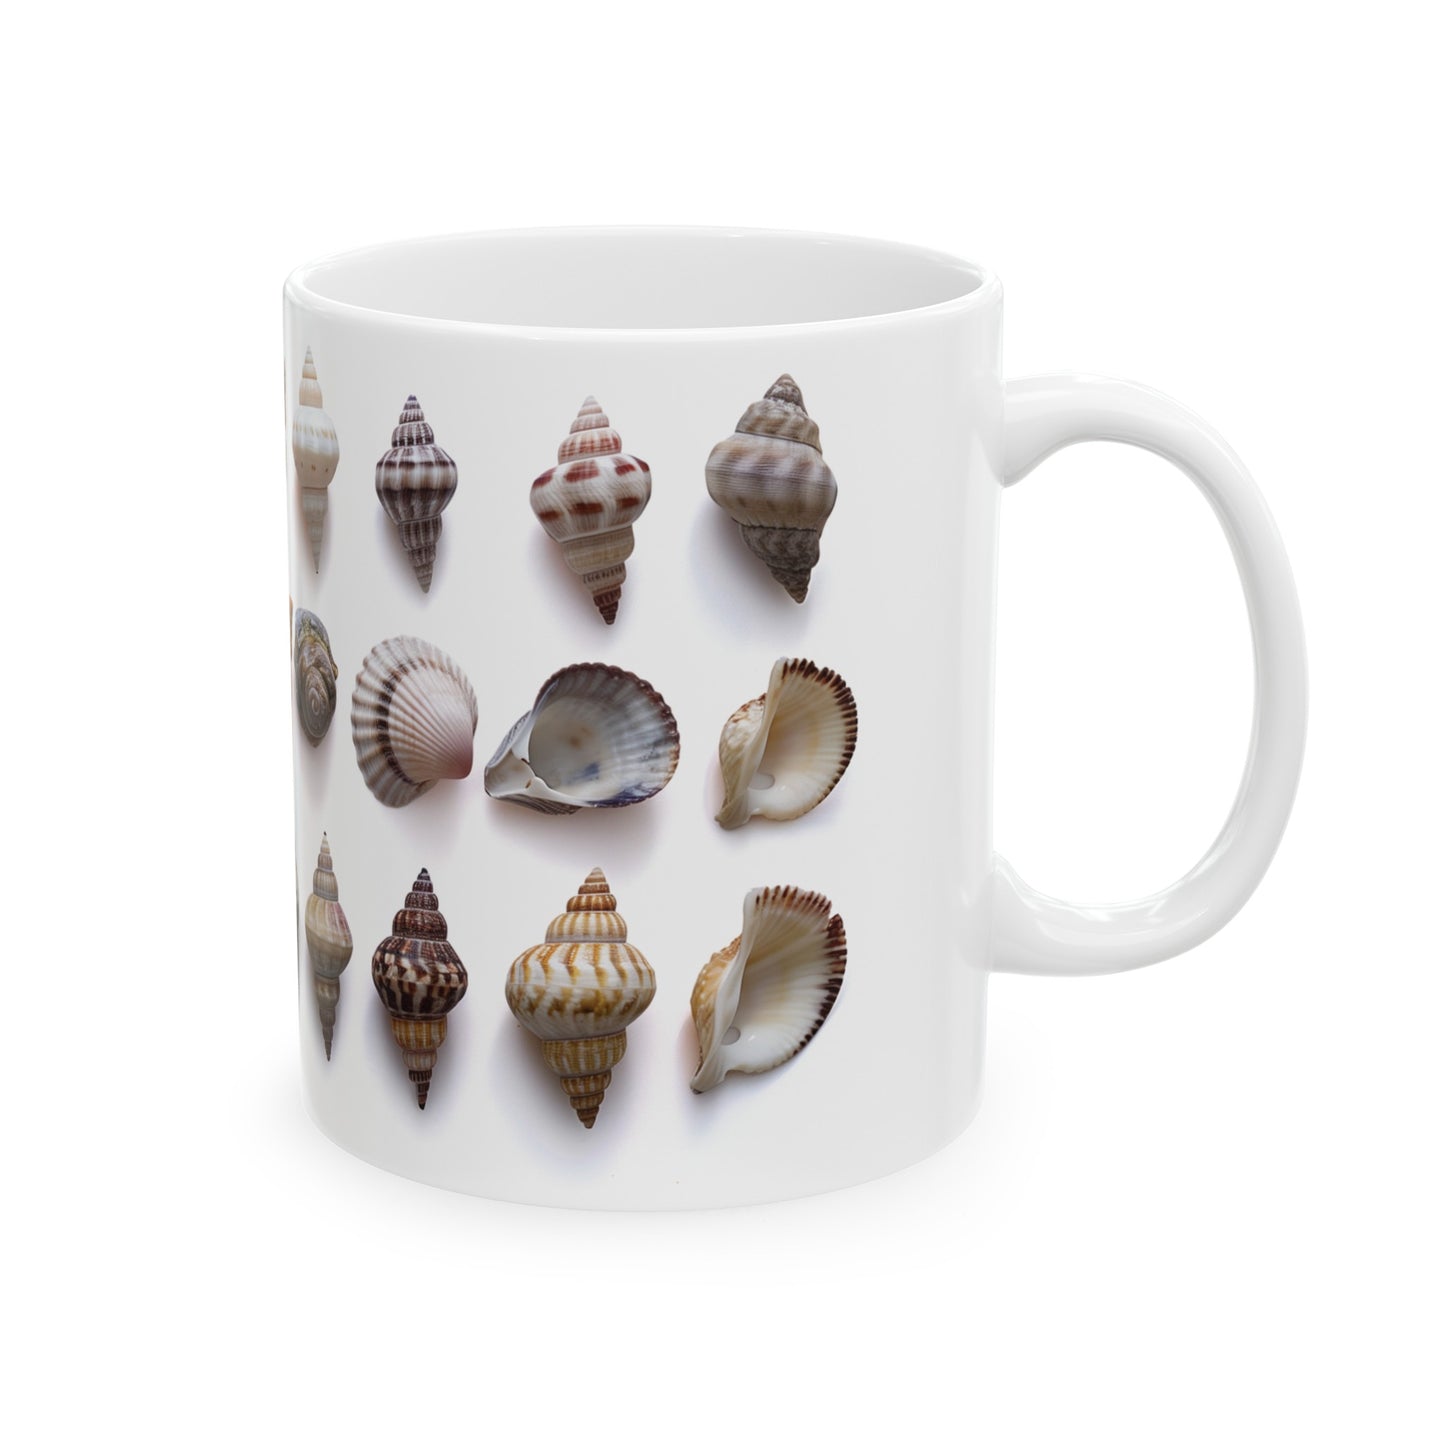 Sea Shell Mug, Colorful Shell Mug, Snail Mug, Clam Mug, Beach Mug, Vacation Tea Cup, Beach Lover Mug, Summer Mug, Coastal Mug